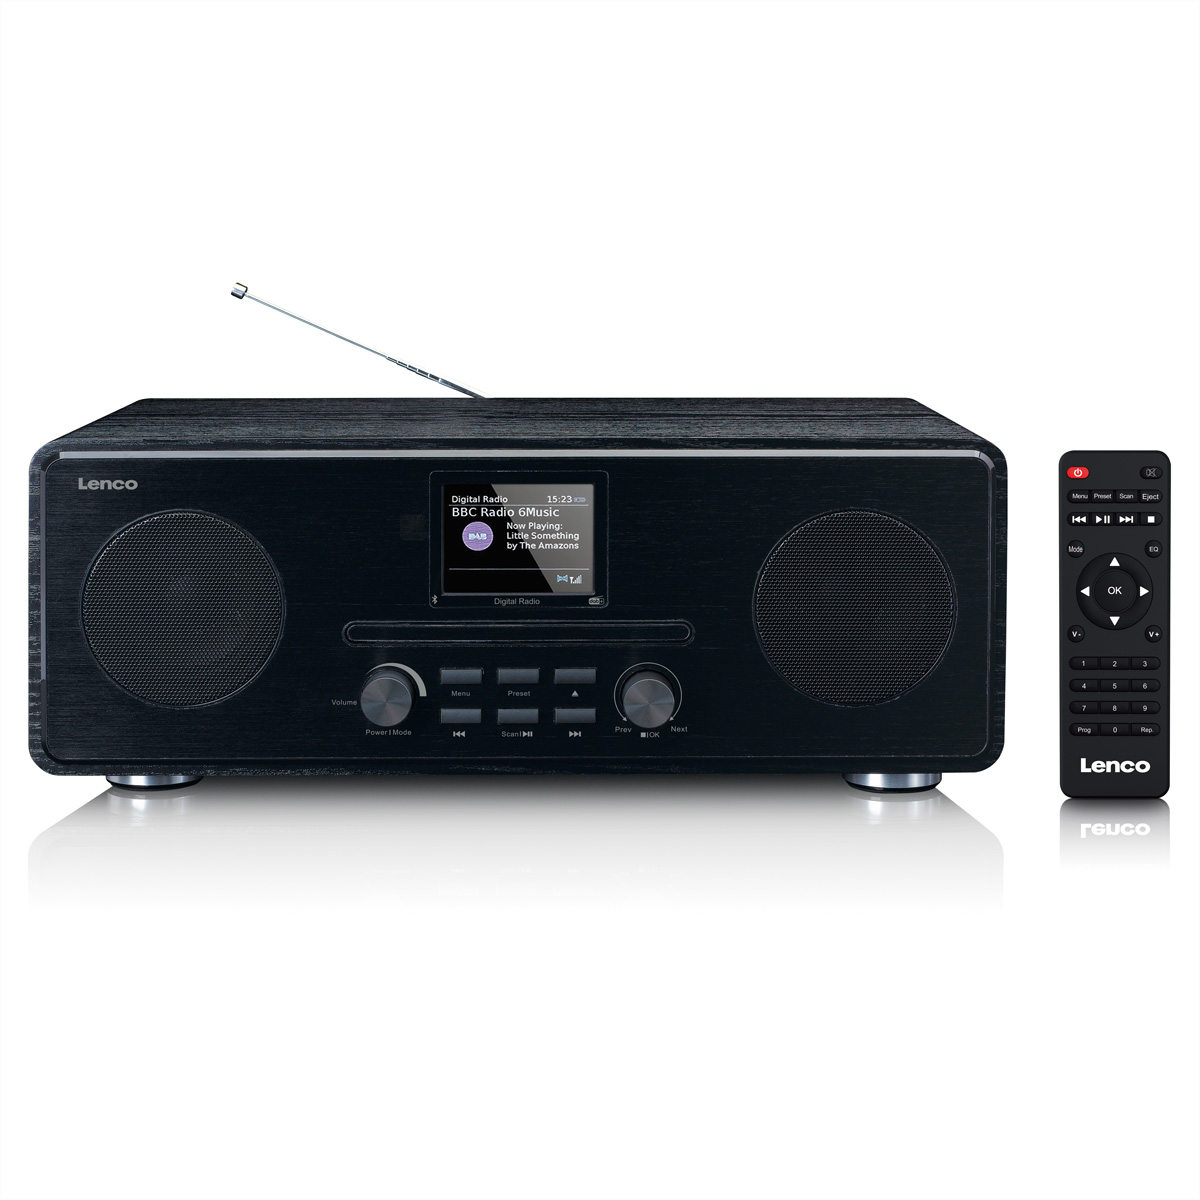 Lenco DAB+ Radio DAR-061, MP3, Bluetooth